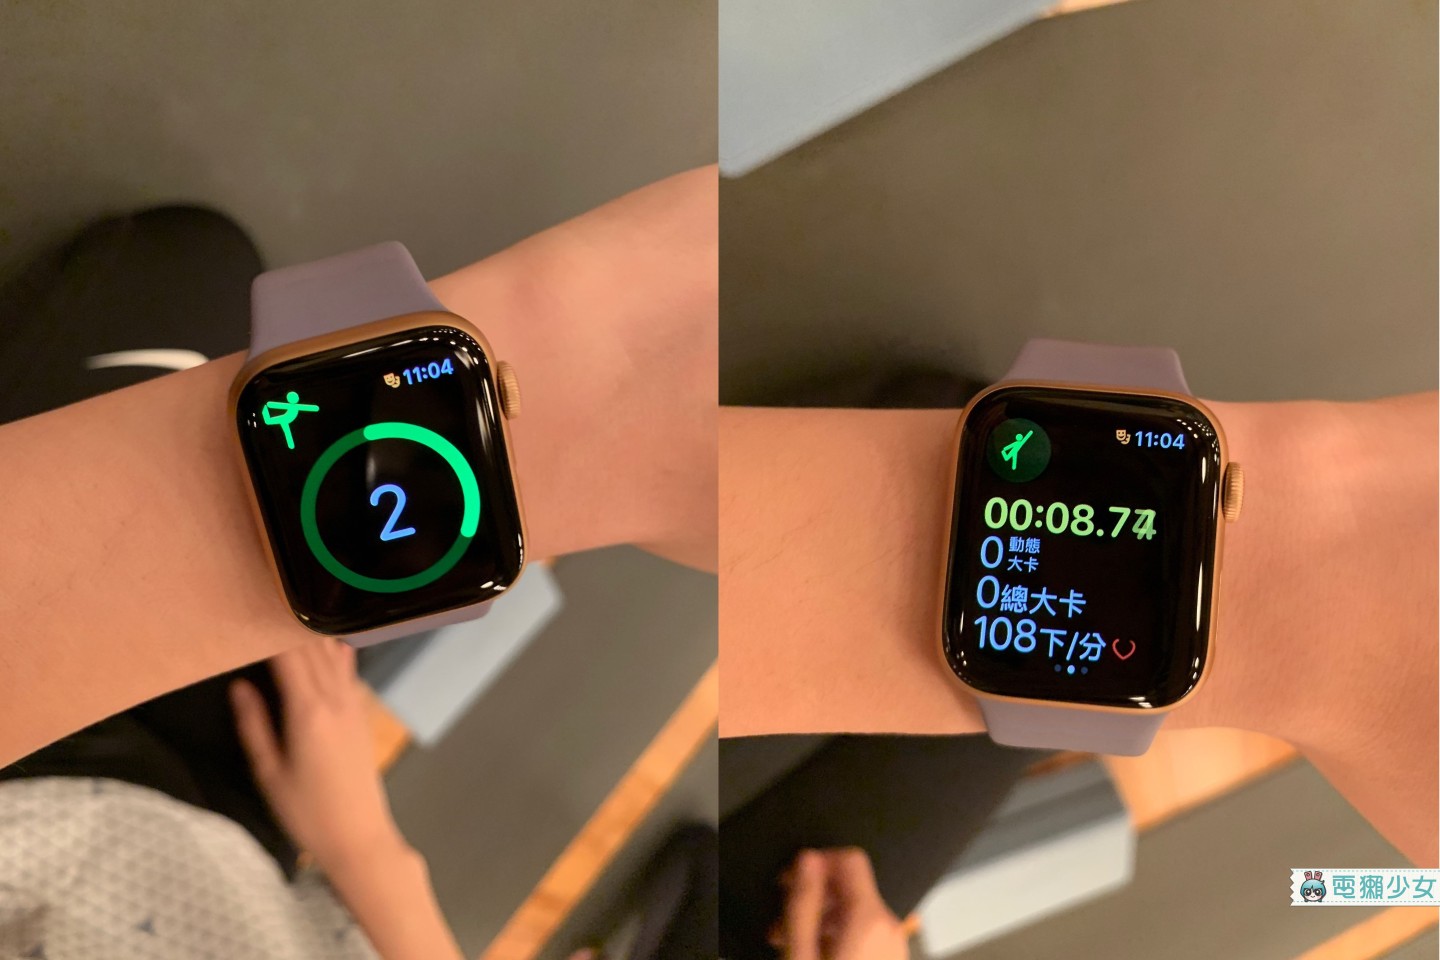 Apple Watch Series 4 全新體能訓練功能「瑜伽」初體驗